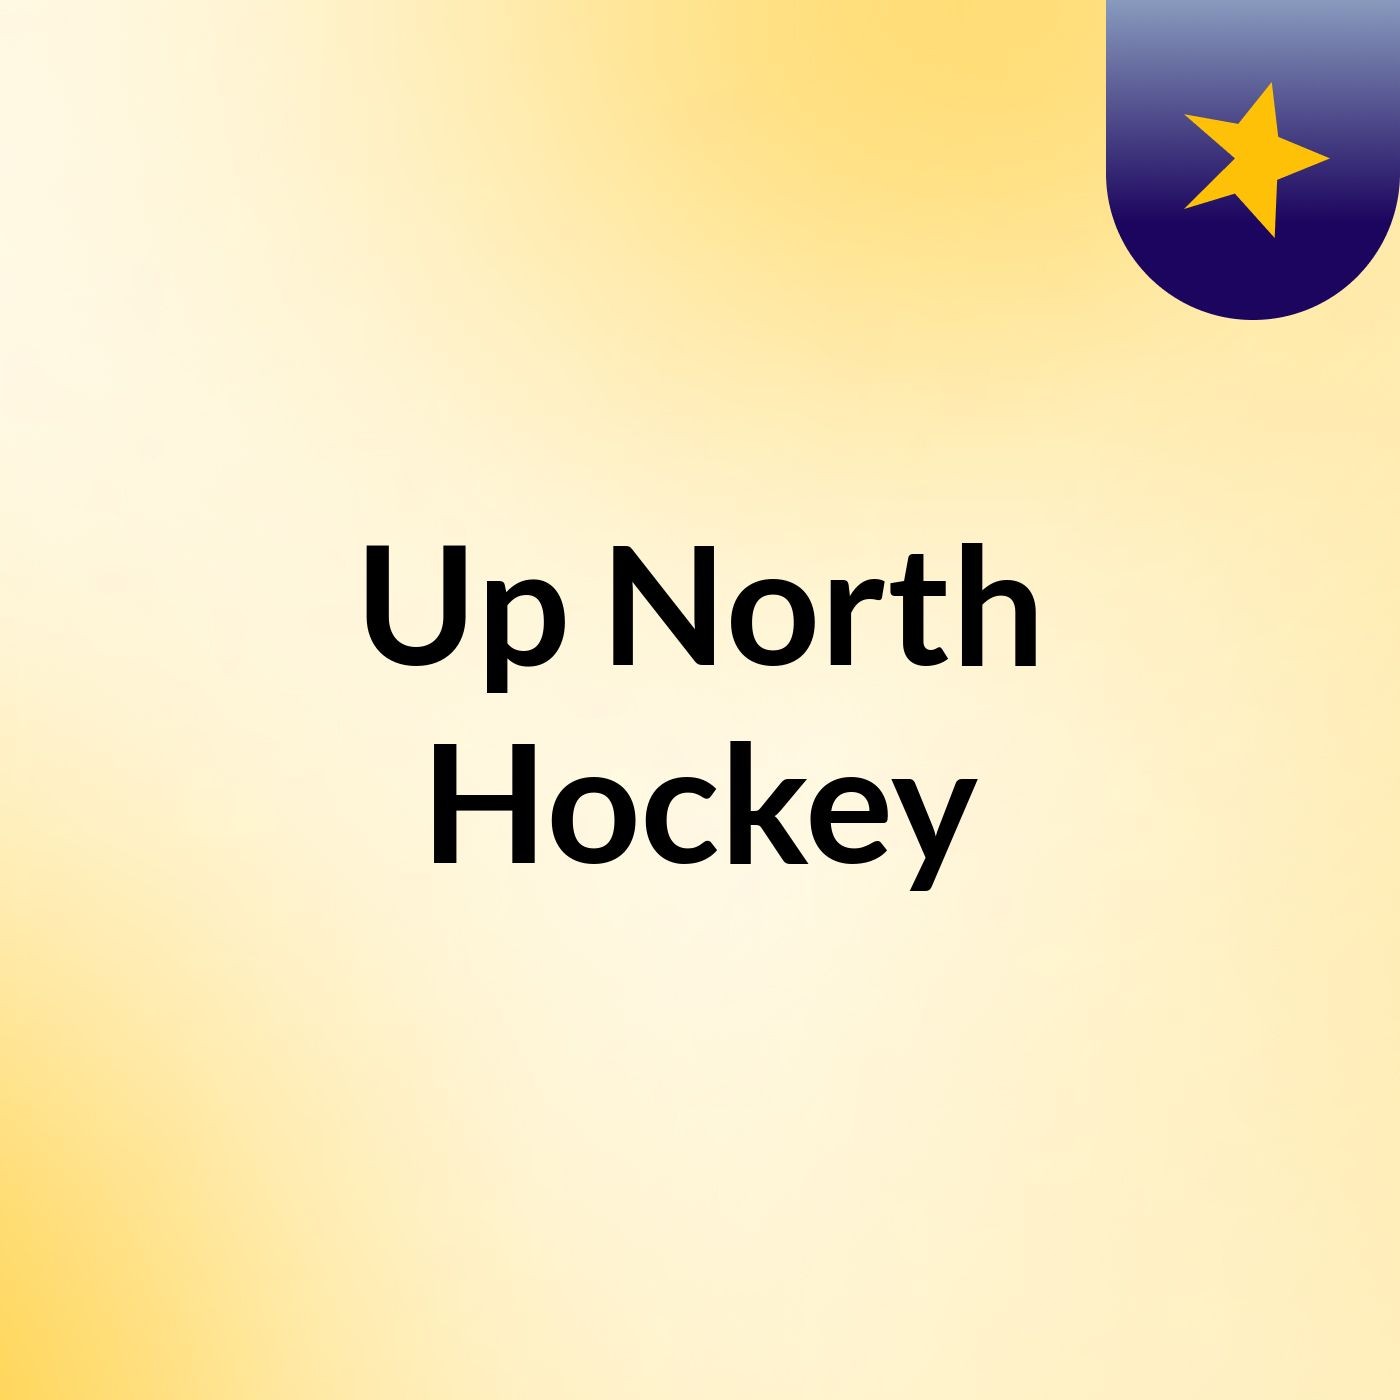 Up North Hockey